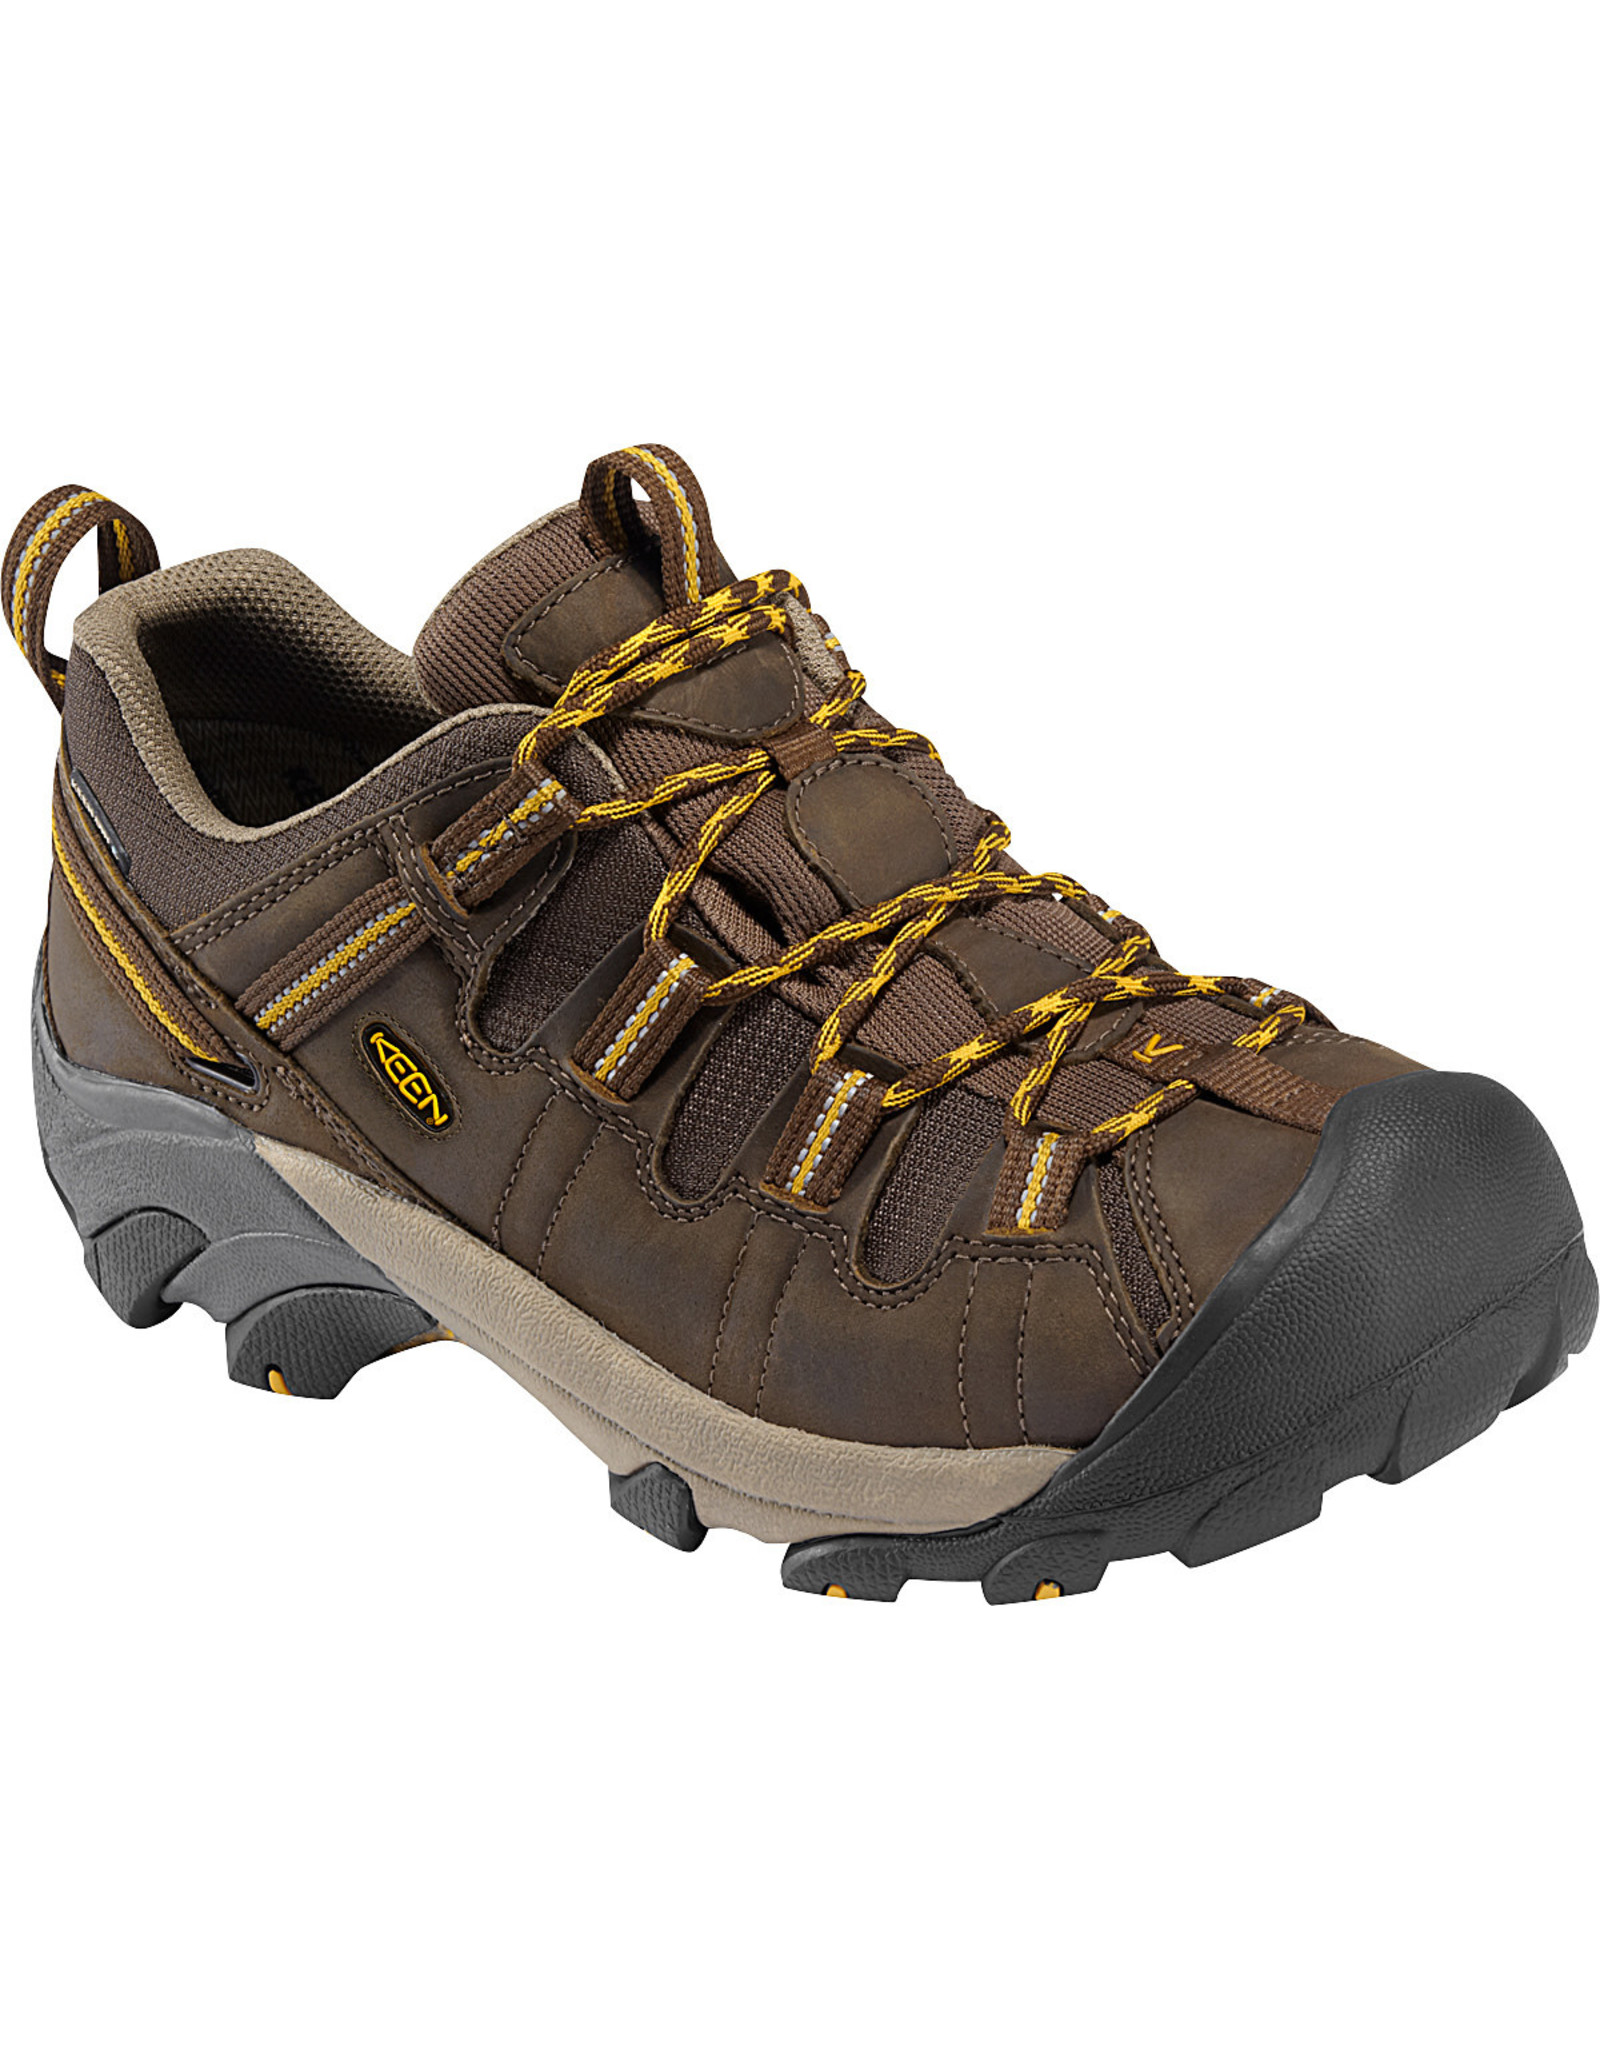 Keen Men’s Outdoor Targhee ll Waterproof Cascade Brown/Golden 1015704 Hiking Shoes